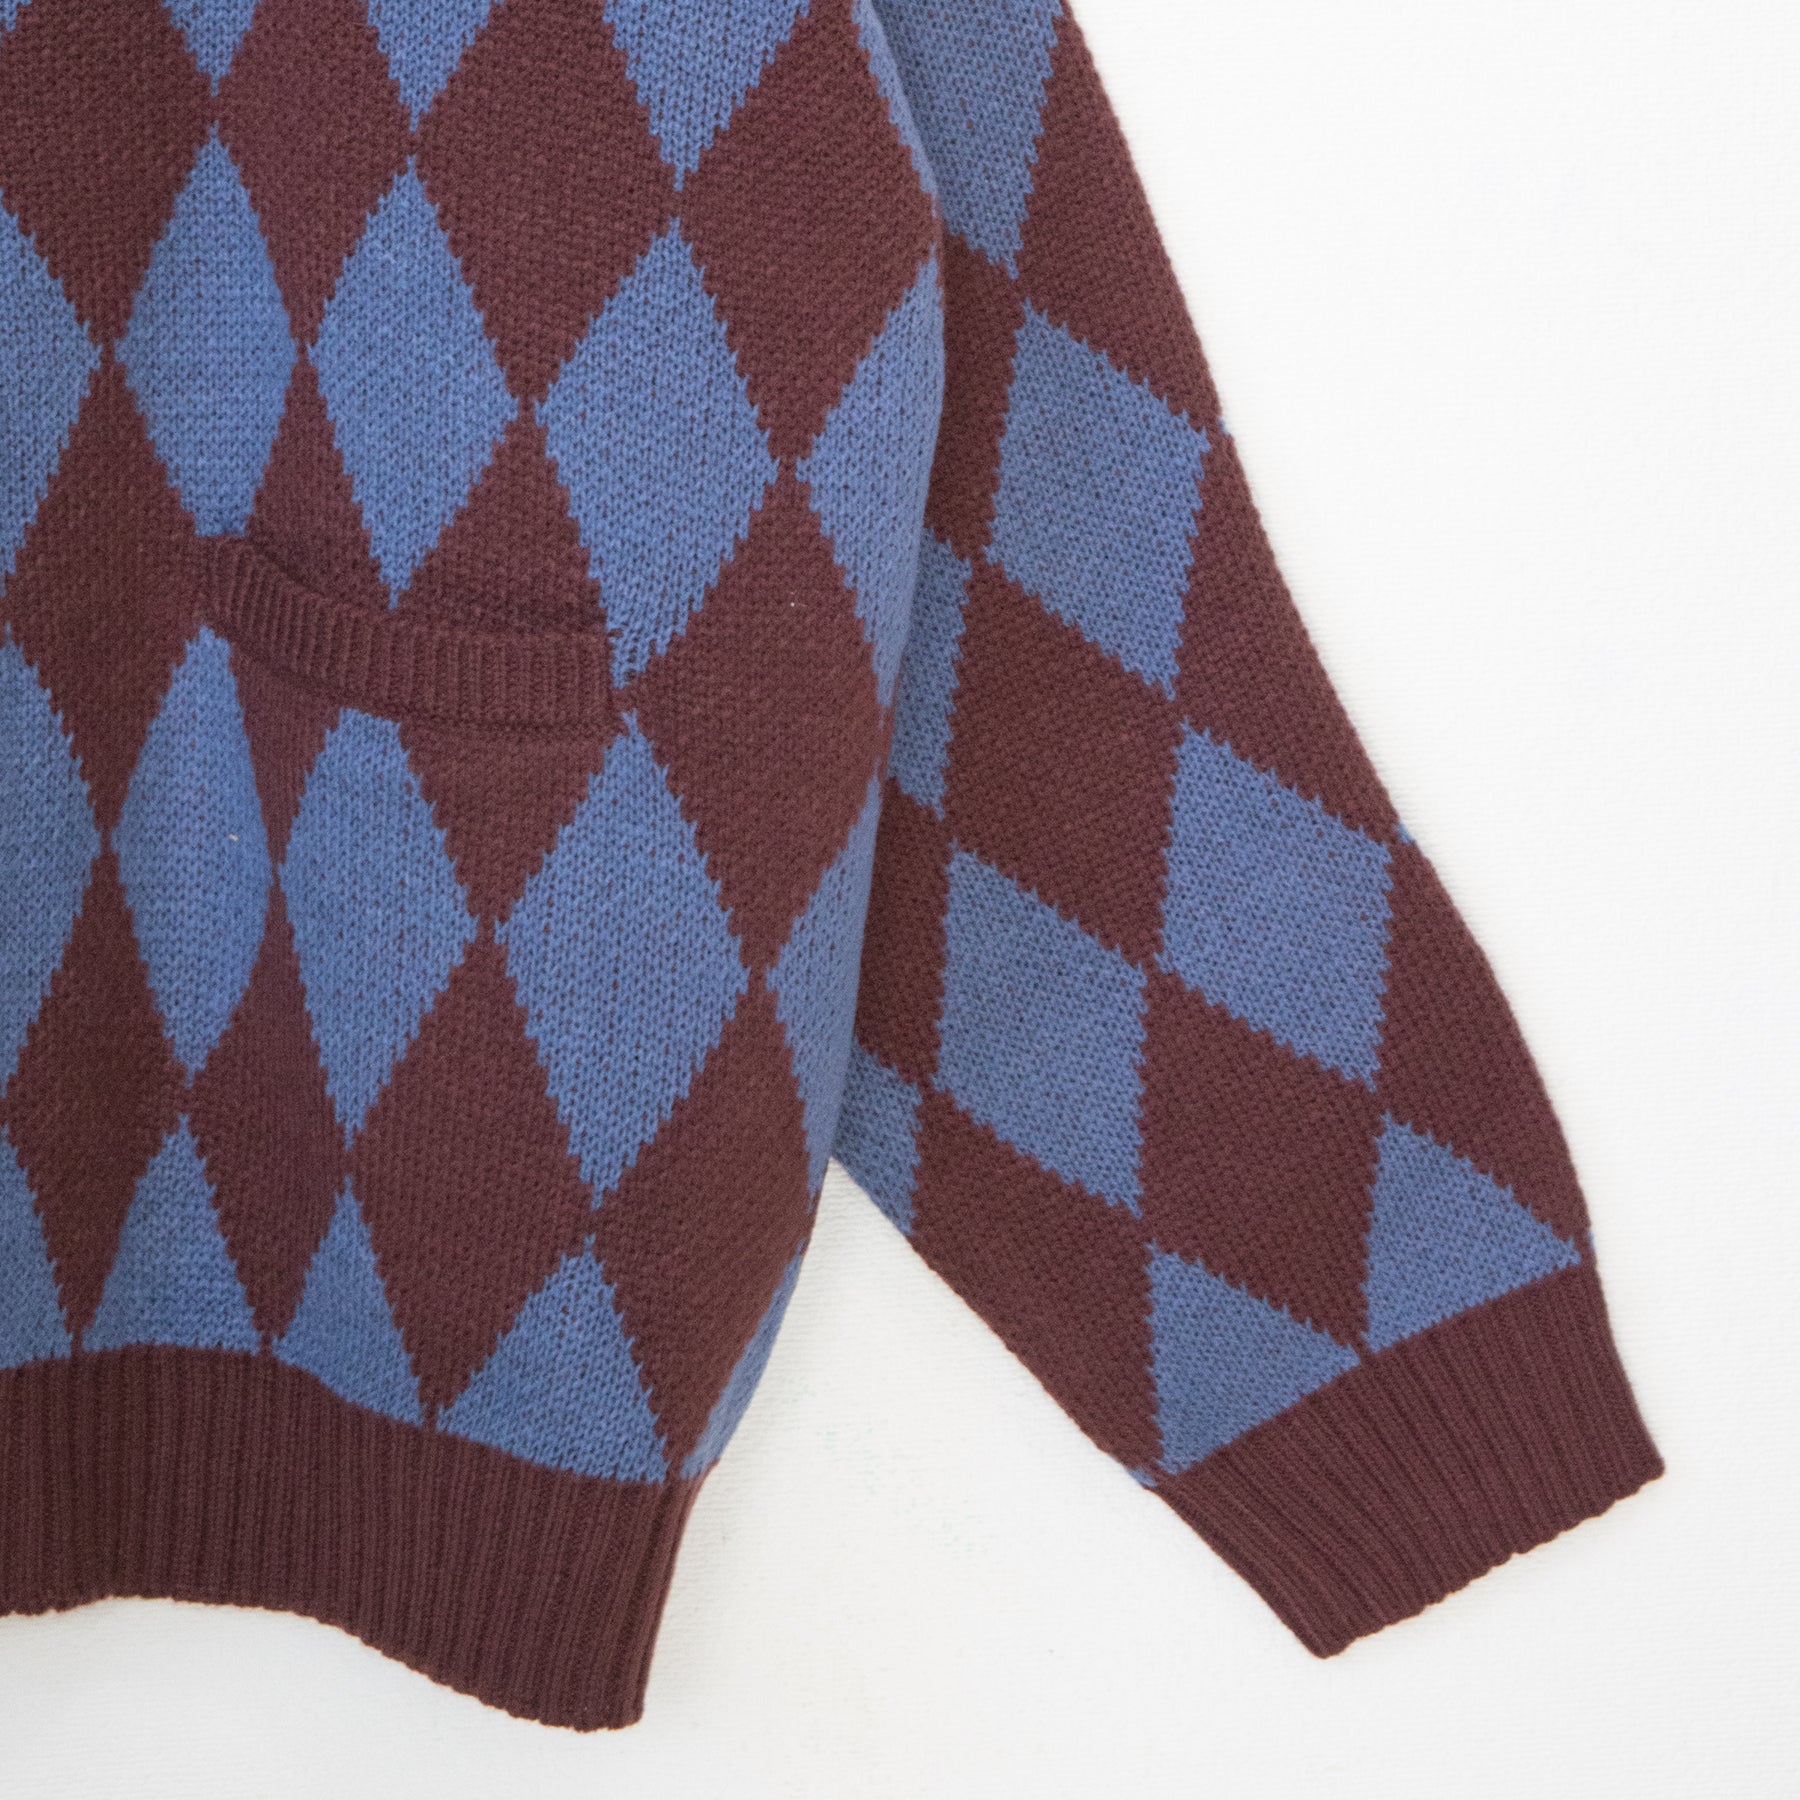 Granny Knit V-neck Cardigan - YOUAREMYPOISON